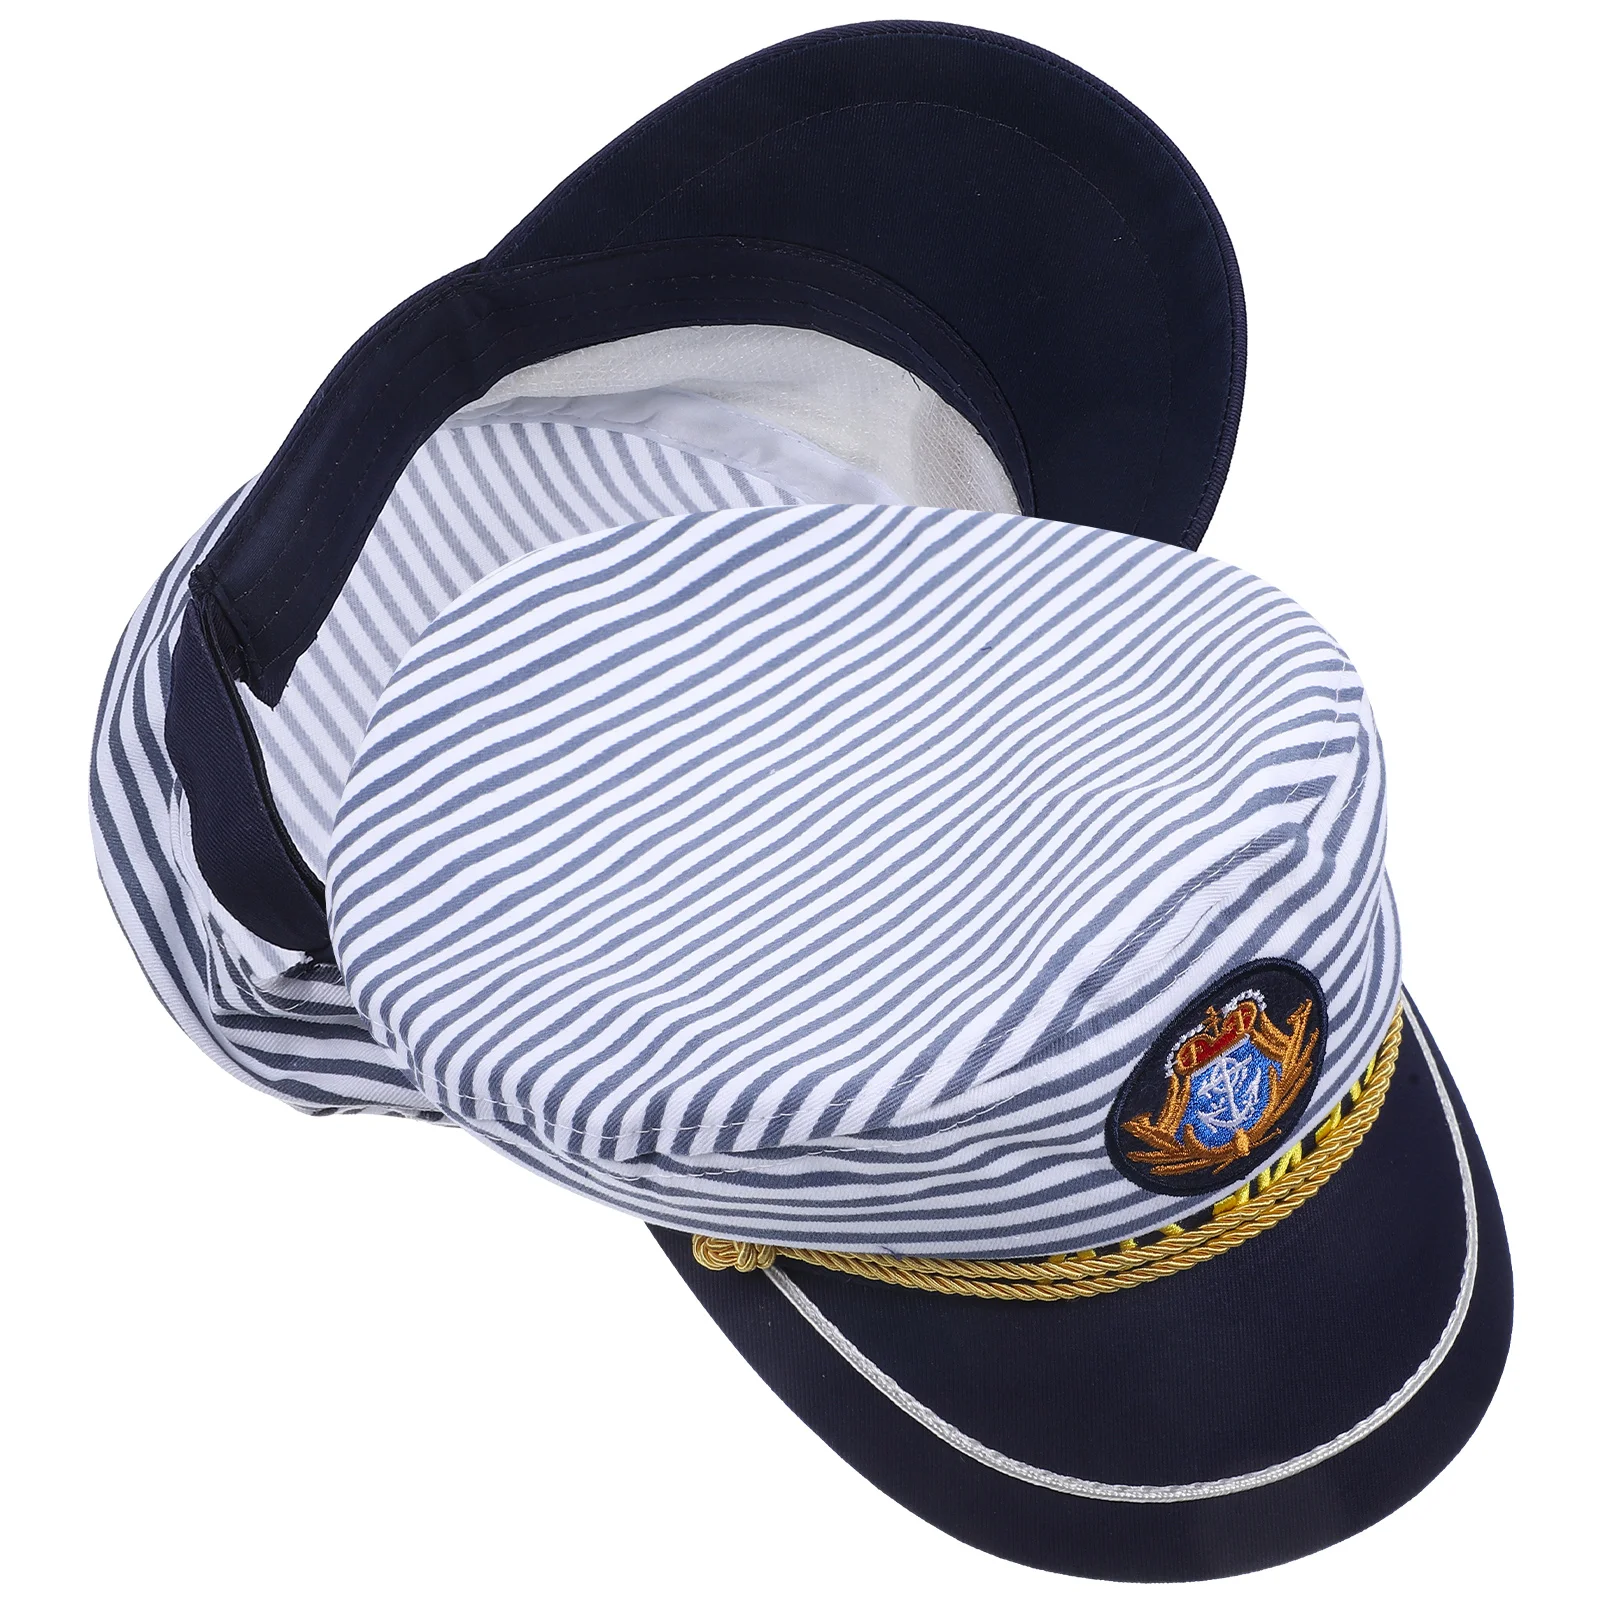 2pcs White Captain Sailor Sailing Sailor Party Hats Captains Hat for  Boating Marine Cap Captains Hat for Women Men Gifts Sailor Hats Cosplay  Travel